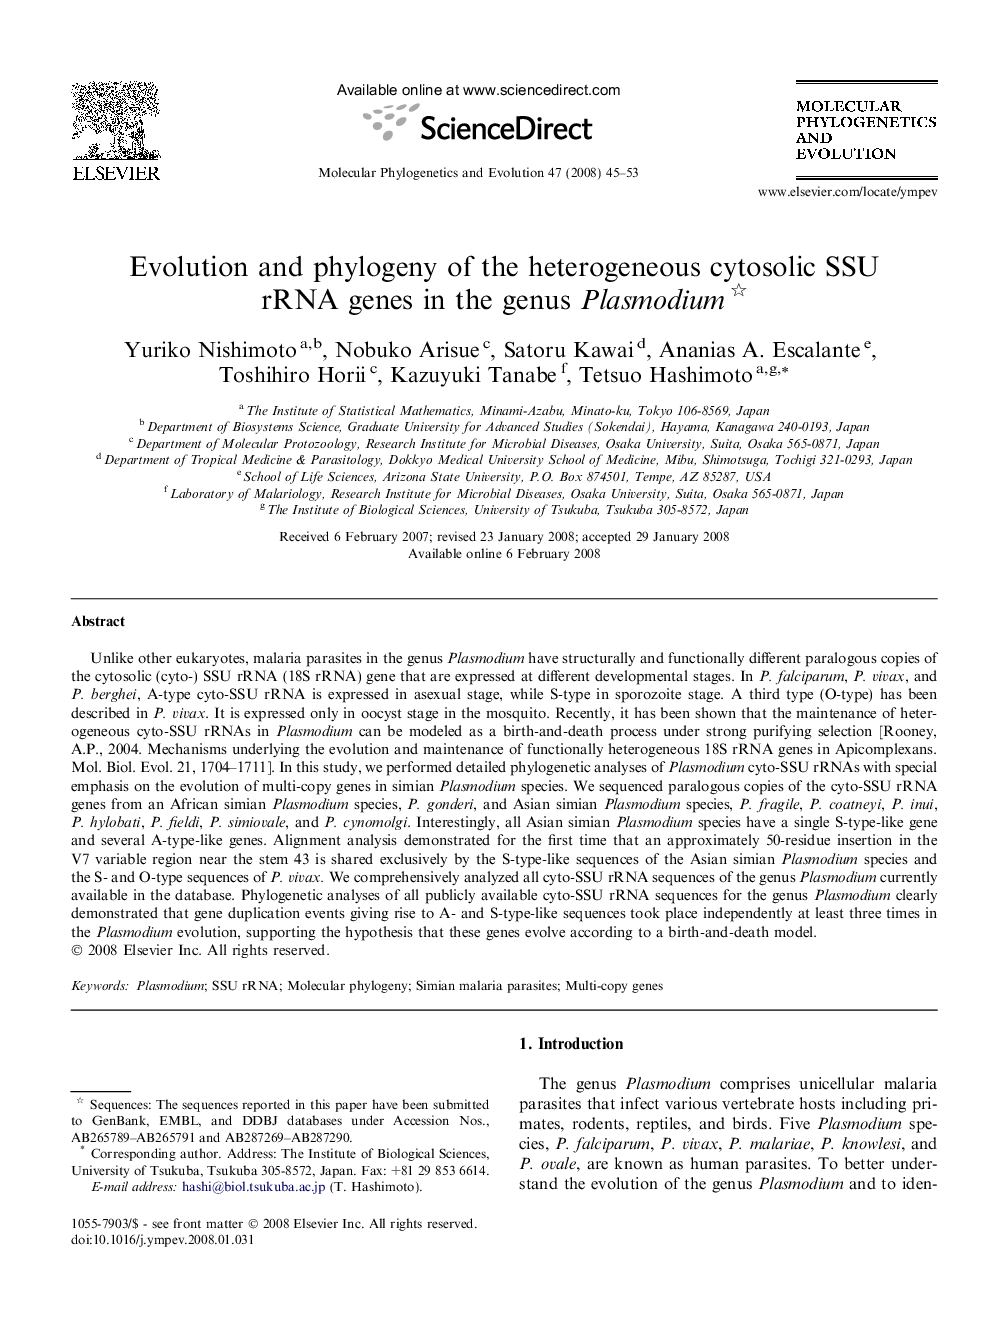 Evolution and phylogeny of the heterogeneous cytosolic SSU rRNA genes in the genus Plasmodium 